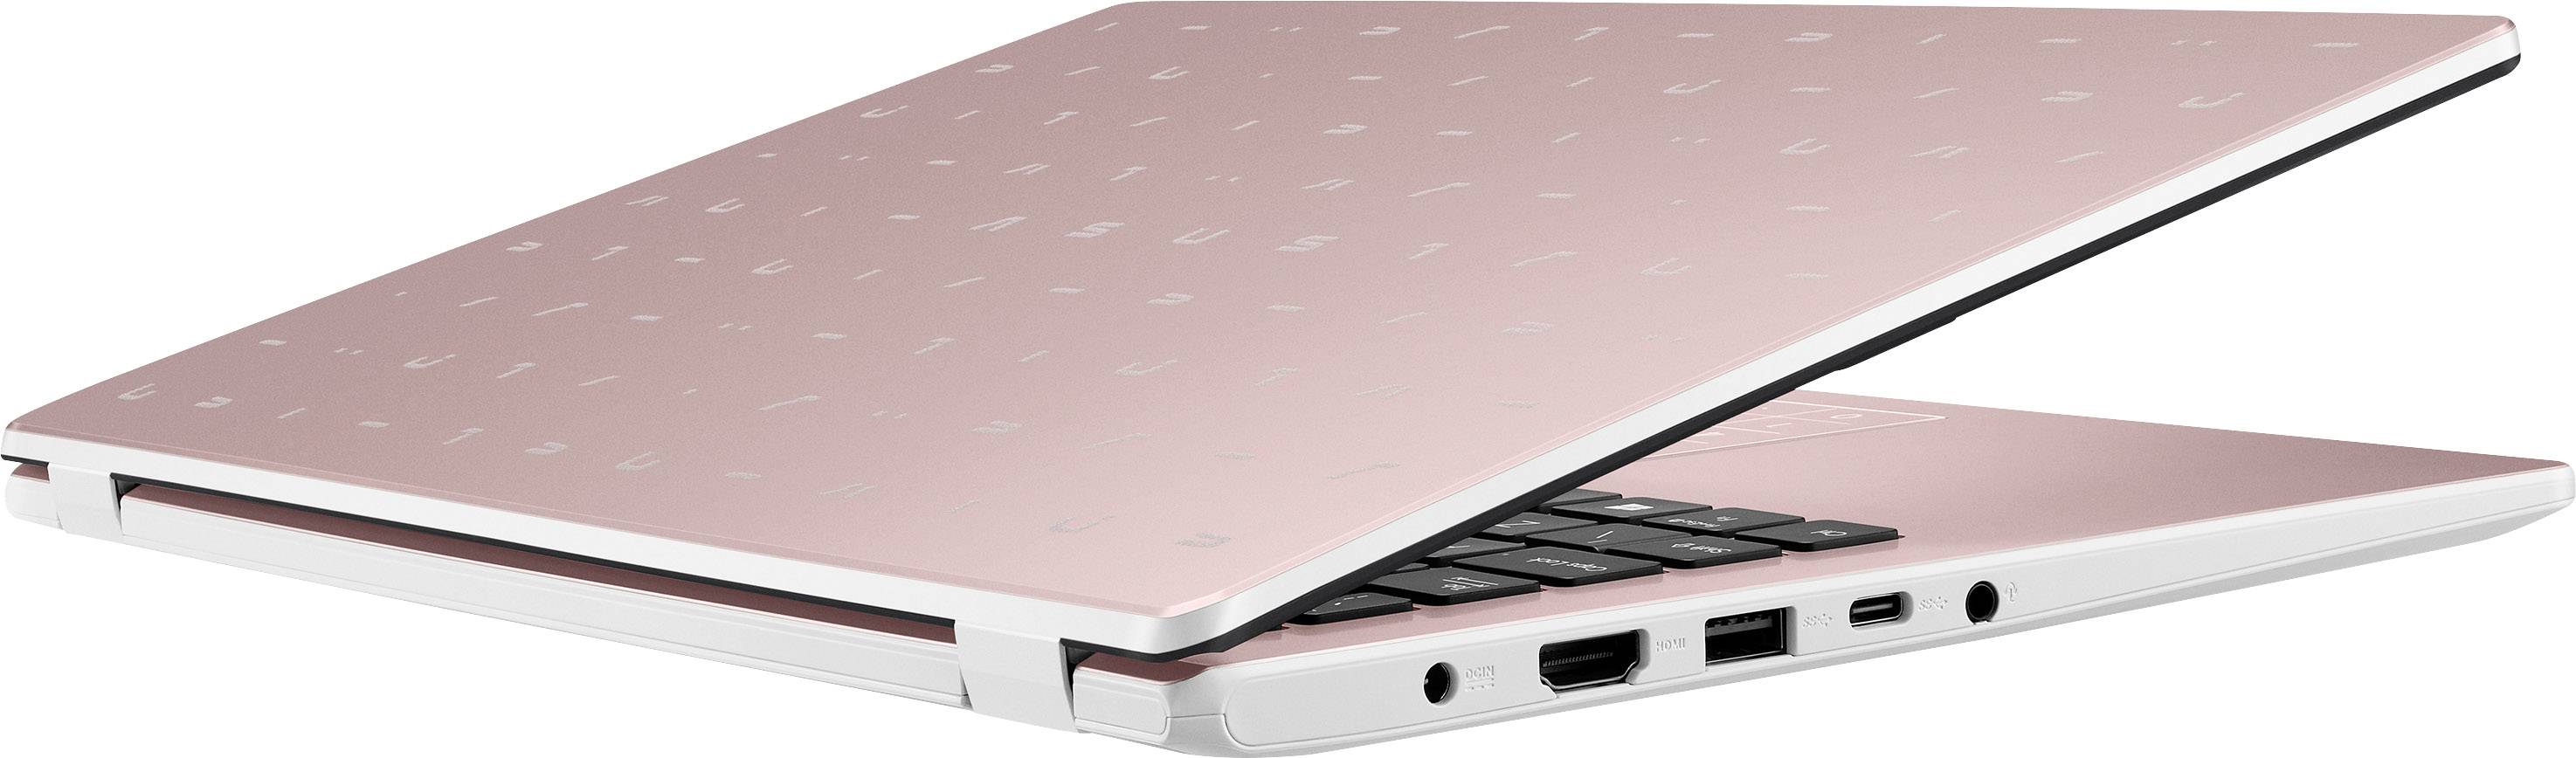 Asus Laptop Vivobook 14 E410ma 356 Cm 14 Inch Full Hd Intel® Pentium® Silver N5030 8 Gb Ram 4014